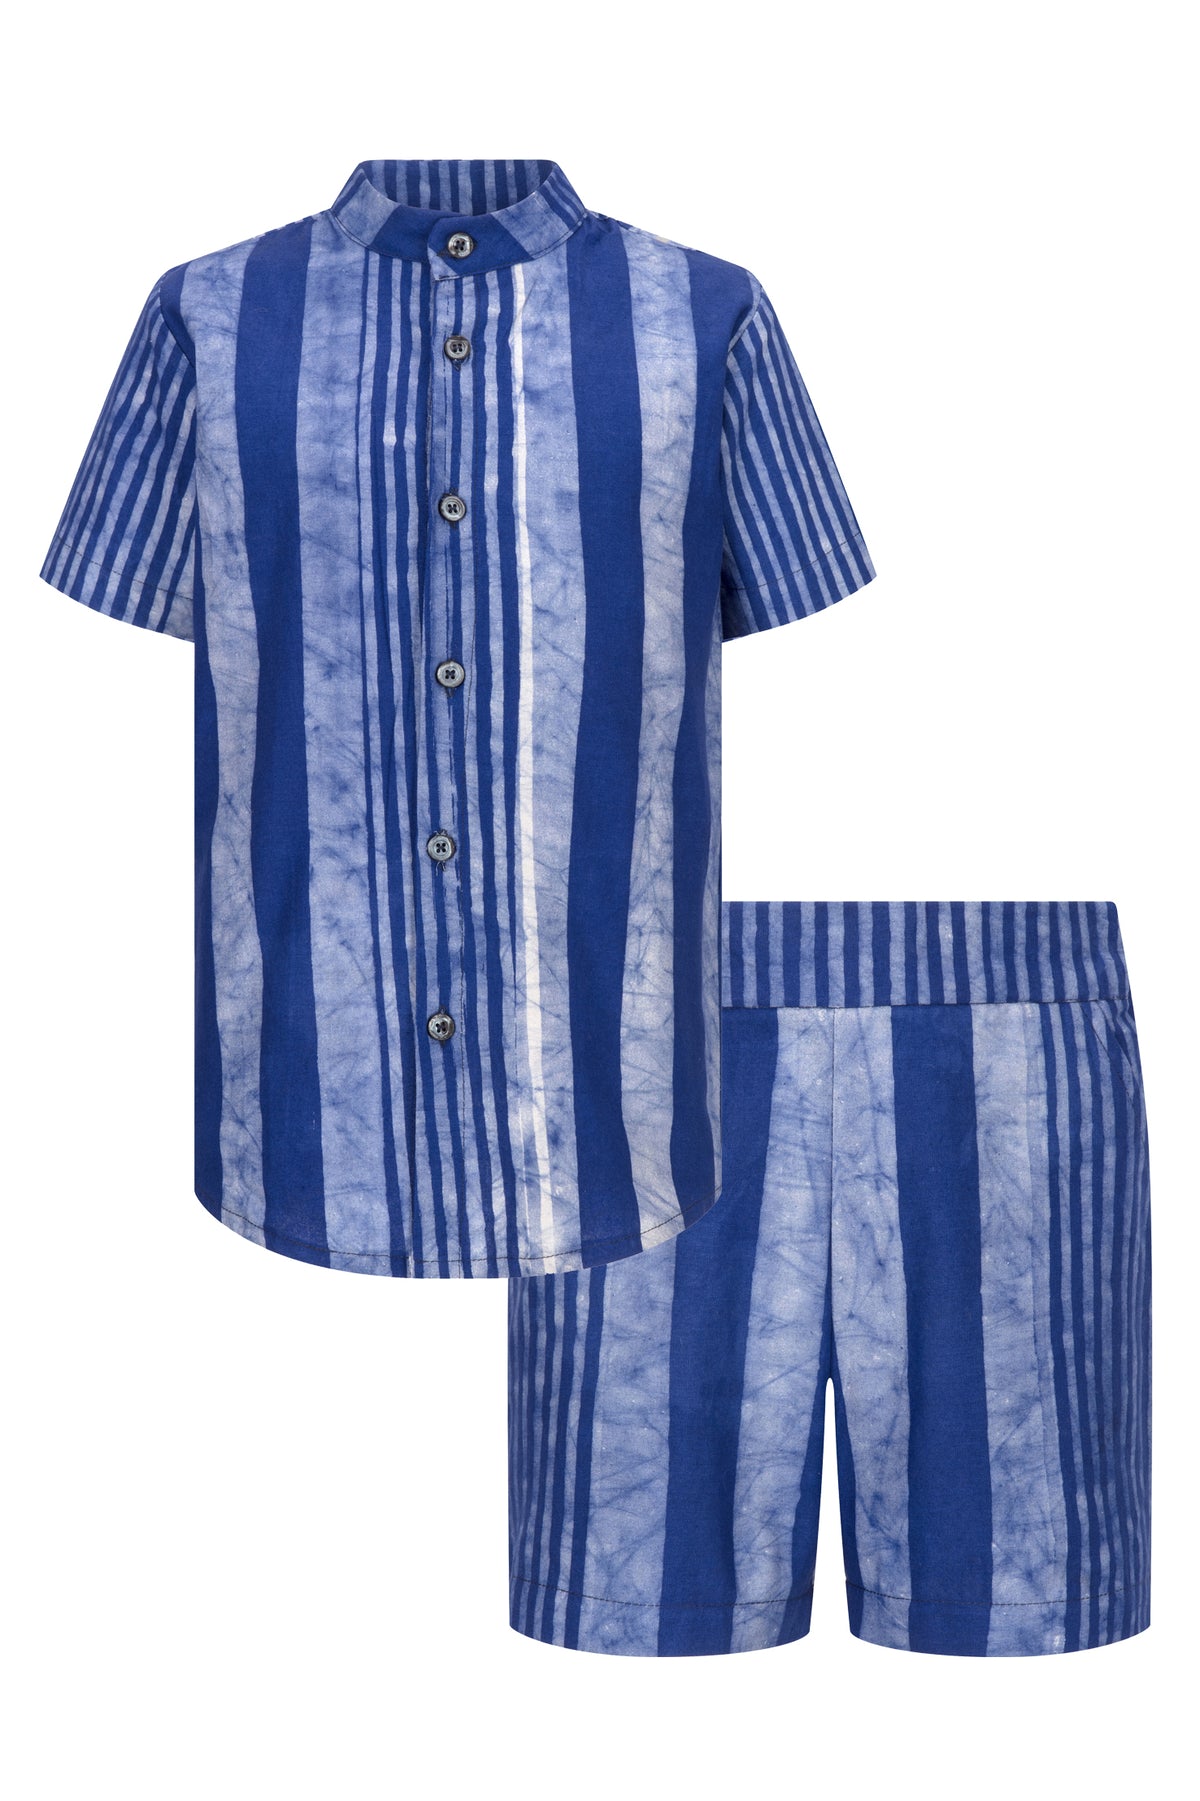 Boys shirt and shorts set- Tie Dye